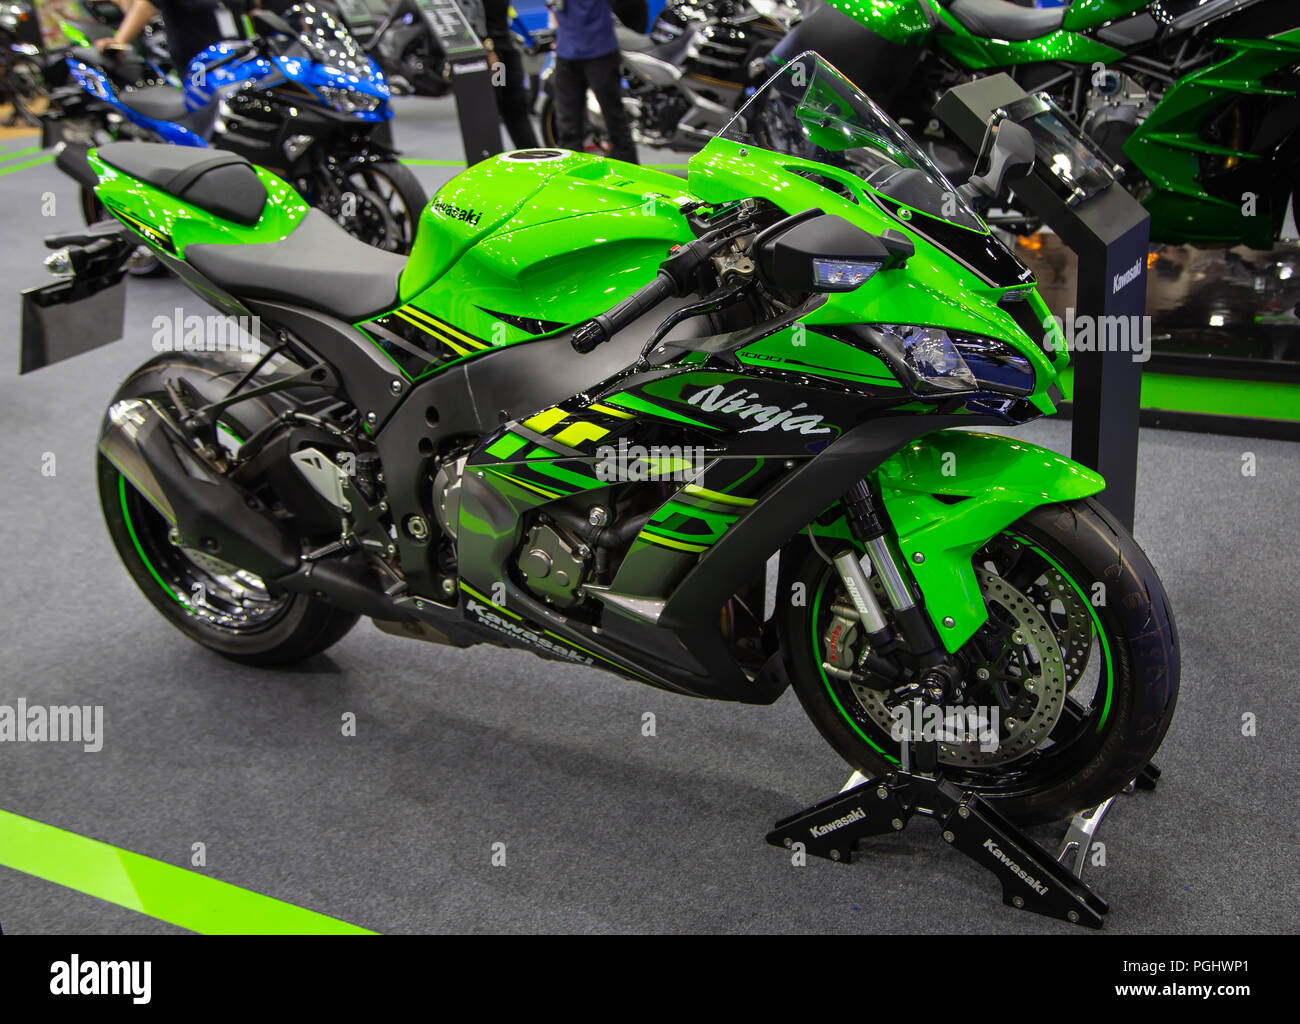 Kawasaki Superbike High Resolution Stock Photography And Images Alamy